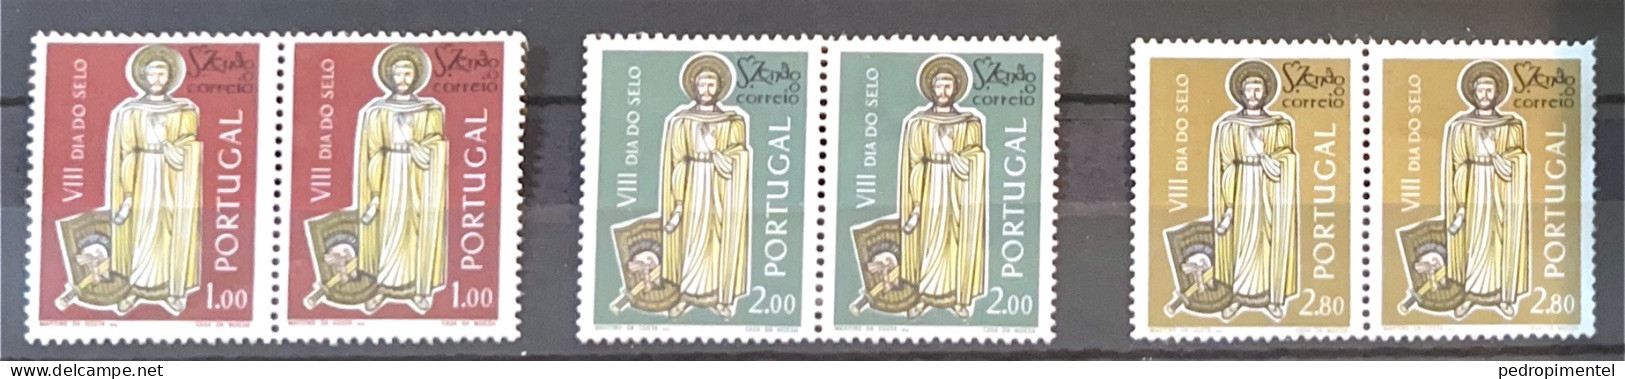 Portugal 1962 "Saint Zenon" Condition MNH #901-903 (pair) - Neufs